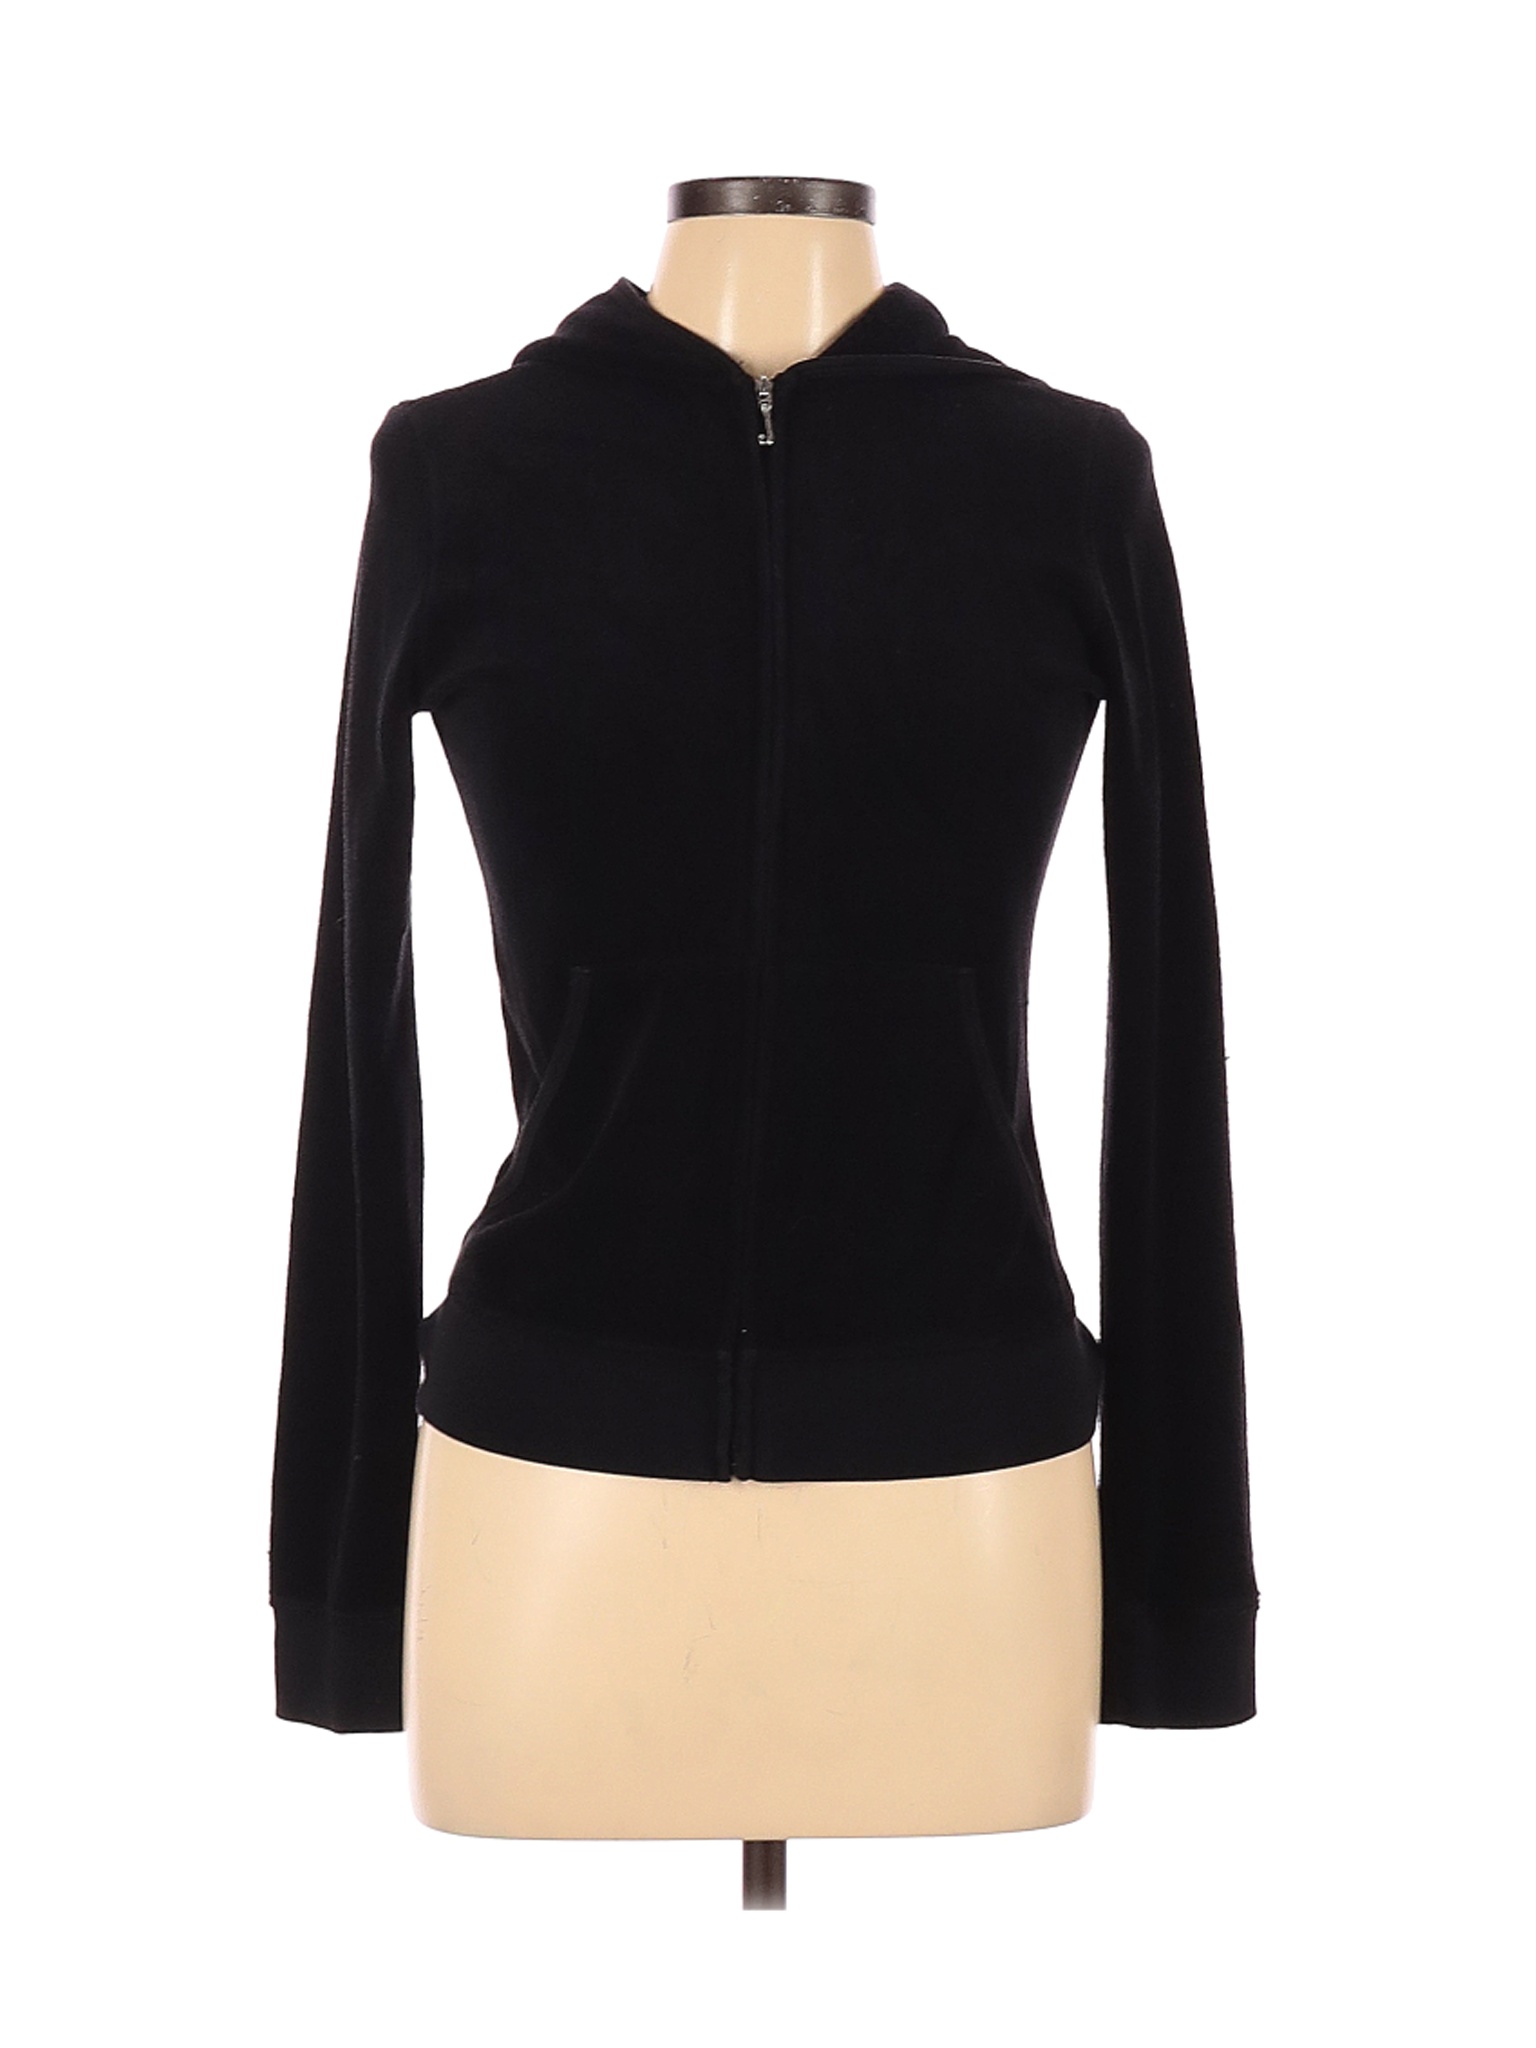 Juicy Couture Women Black Jacket L | eBay